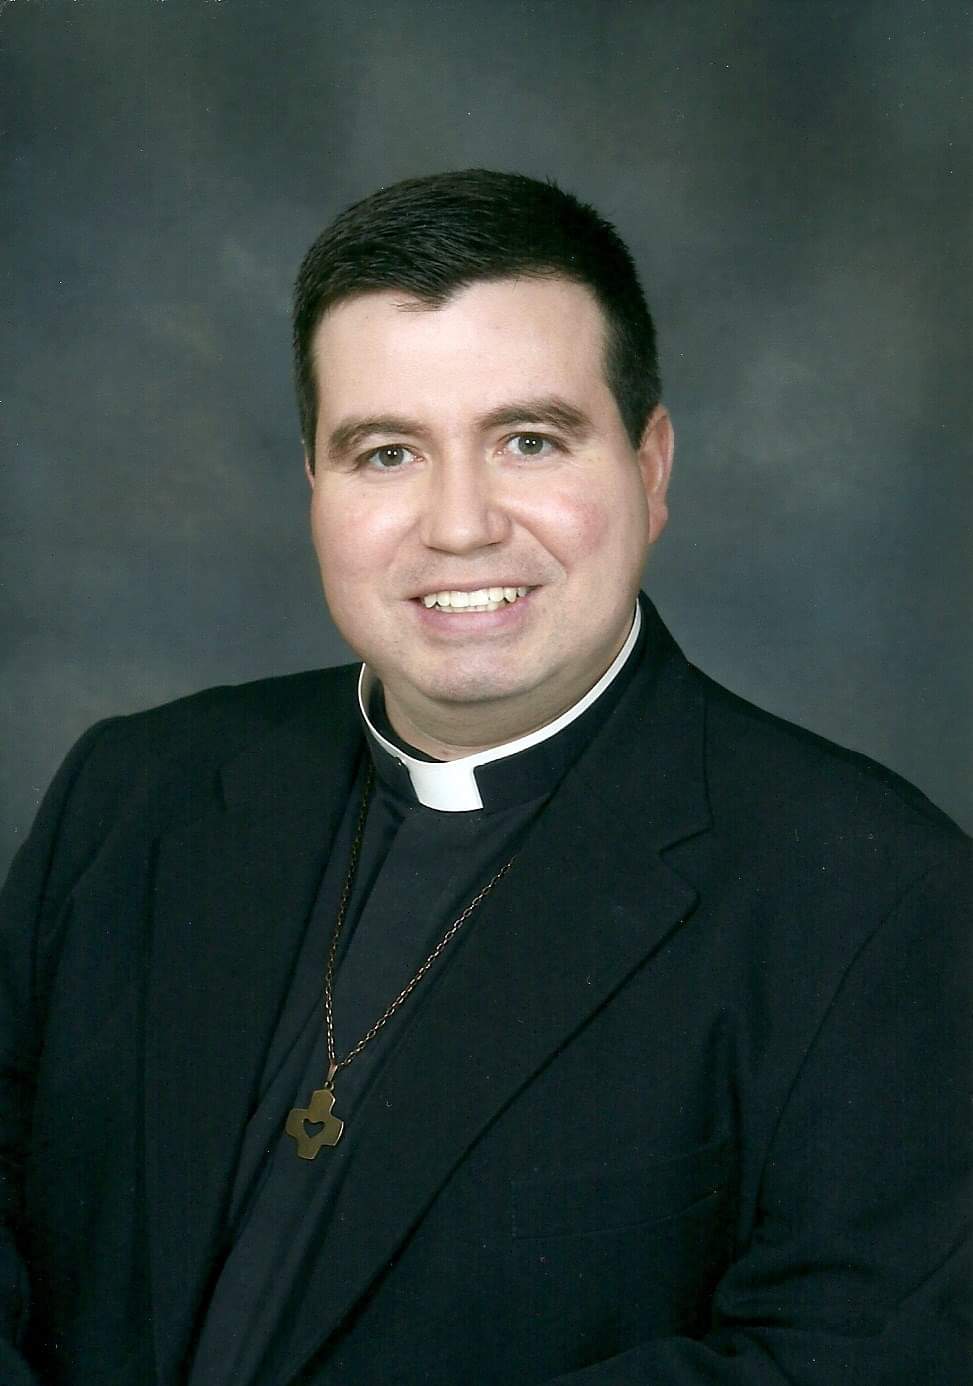 Portrait of Father Willyans